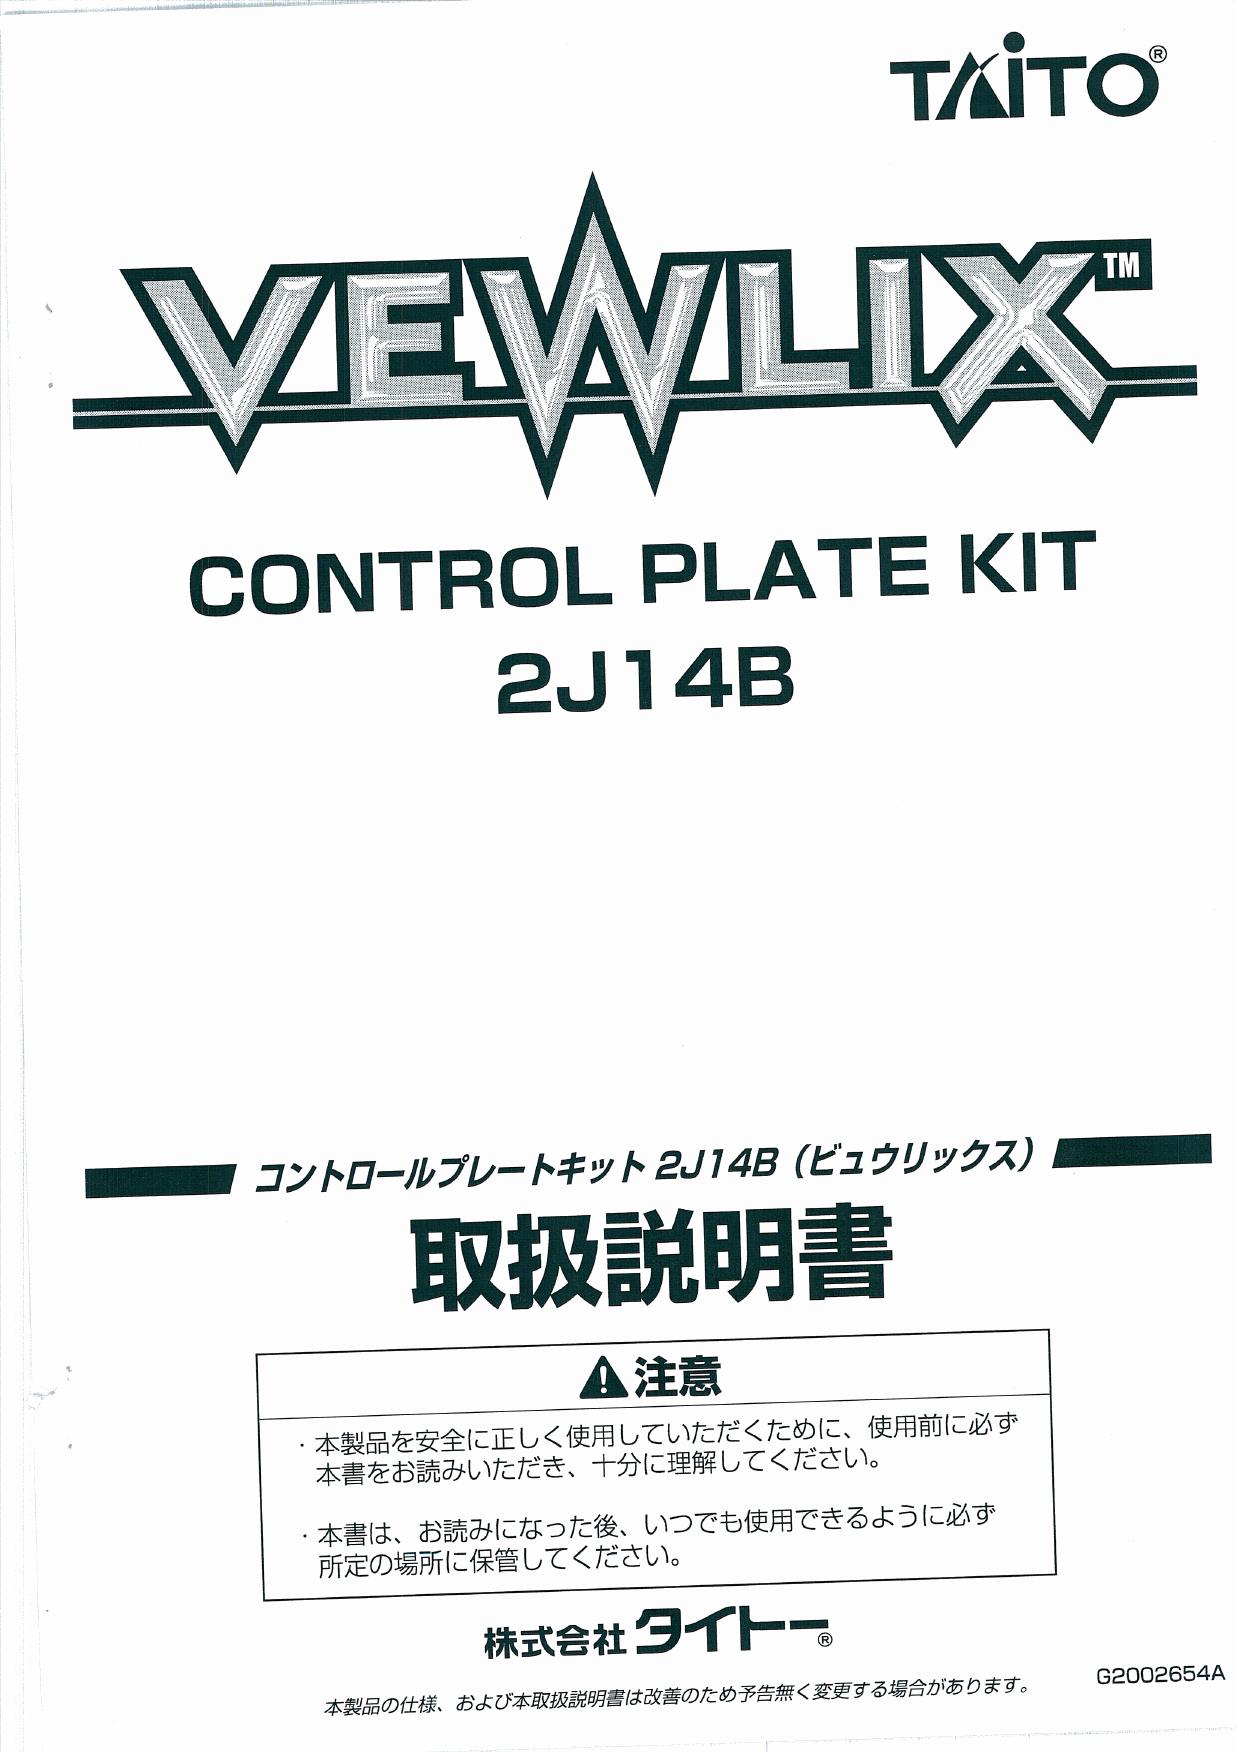 Vewlix Control Plate kit